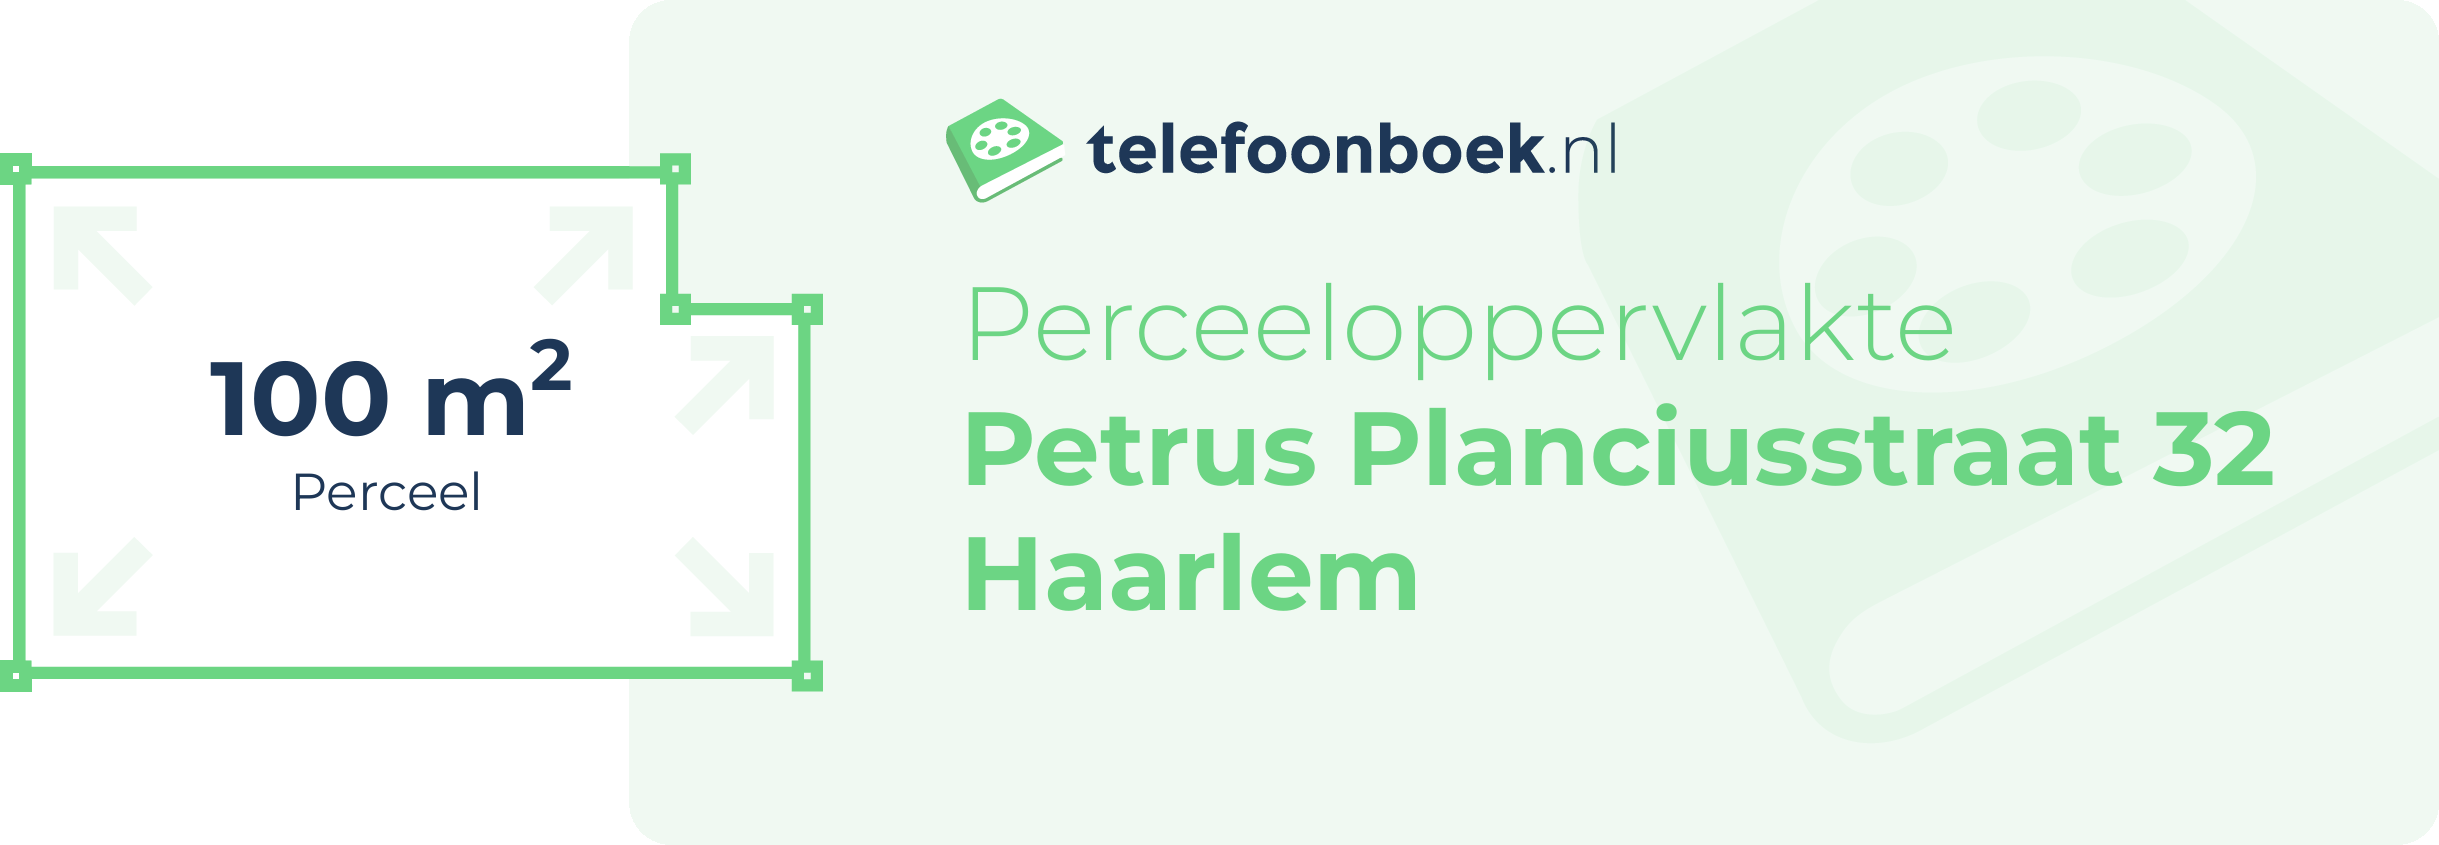 Perceeloppervlakte Petrus Planciusstraat 32 Haarlem